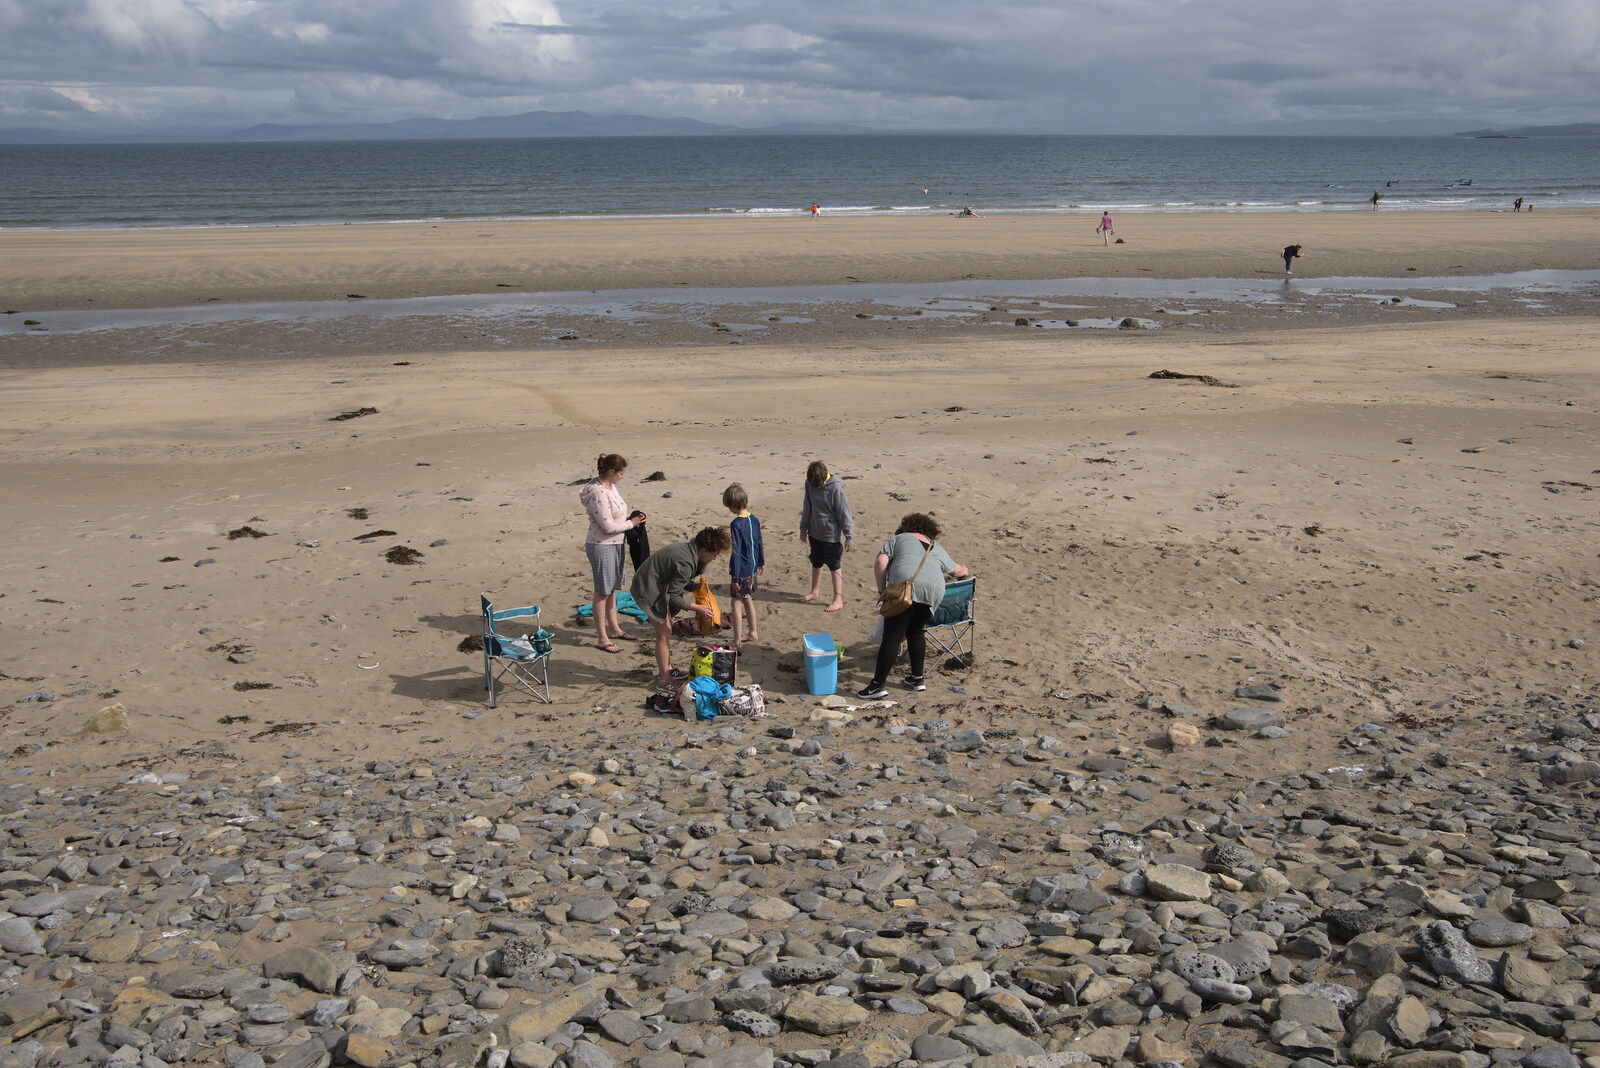 Pints of Guinness and Streedagh Beach, Grange and Sligo, Ireland - 9th August 2021: Our beach encampment